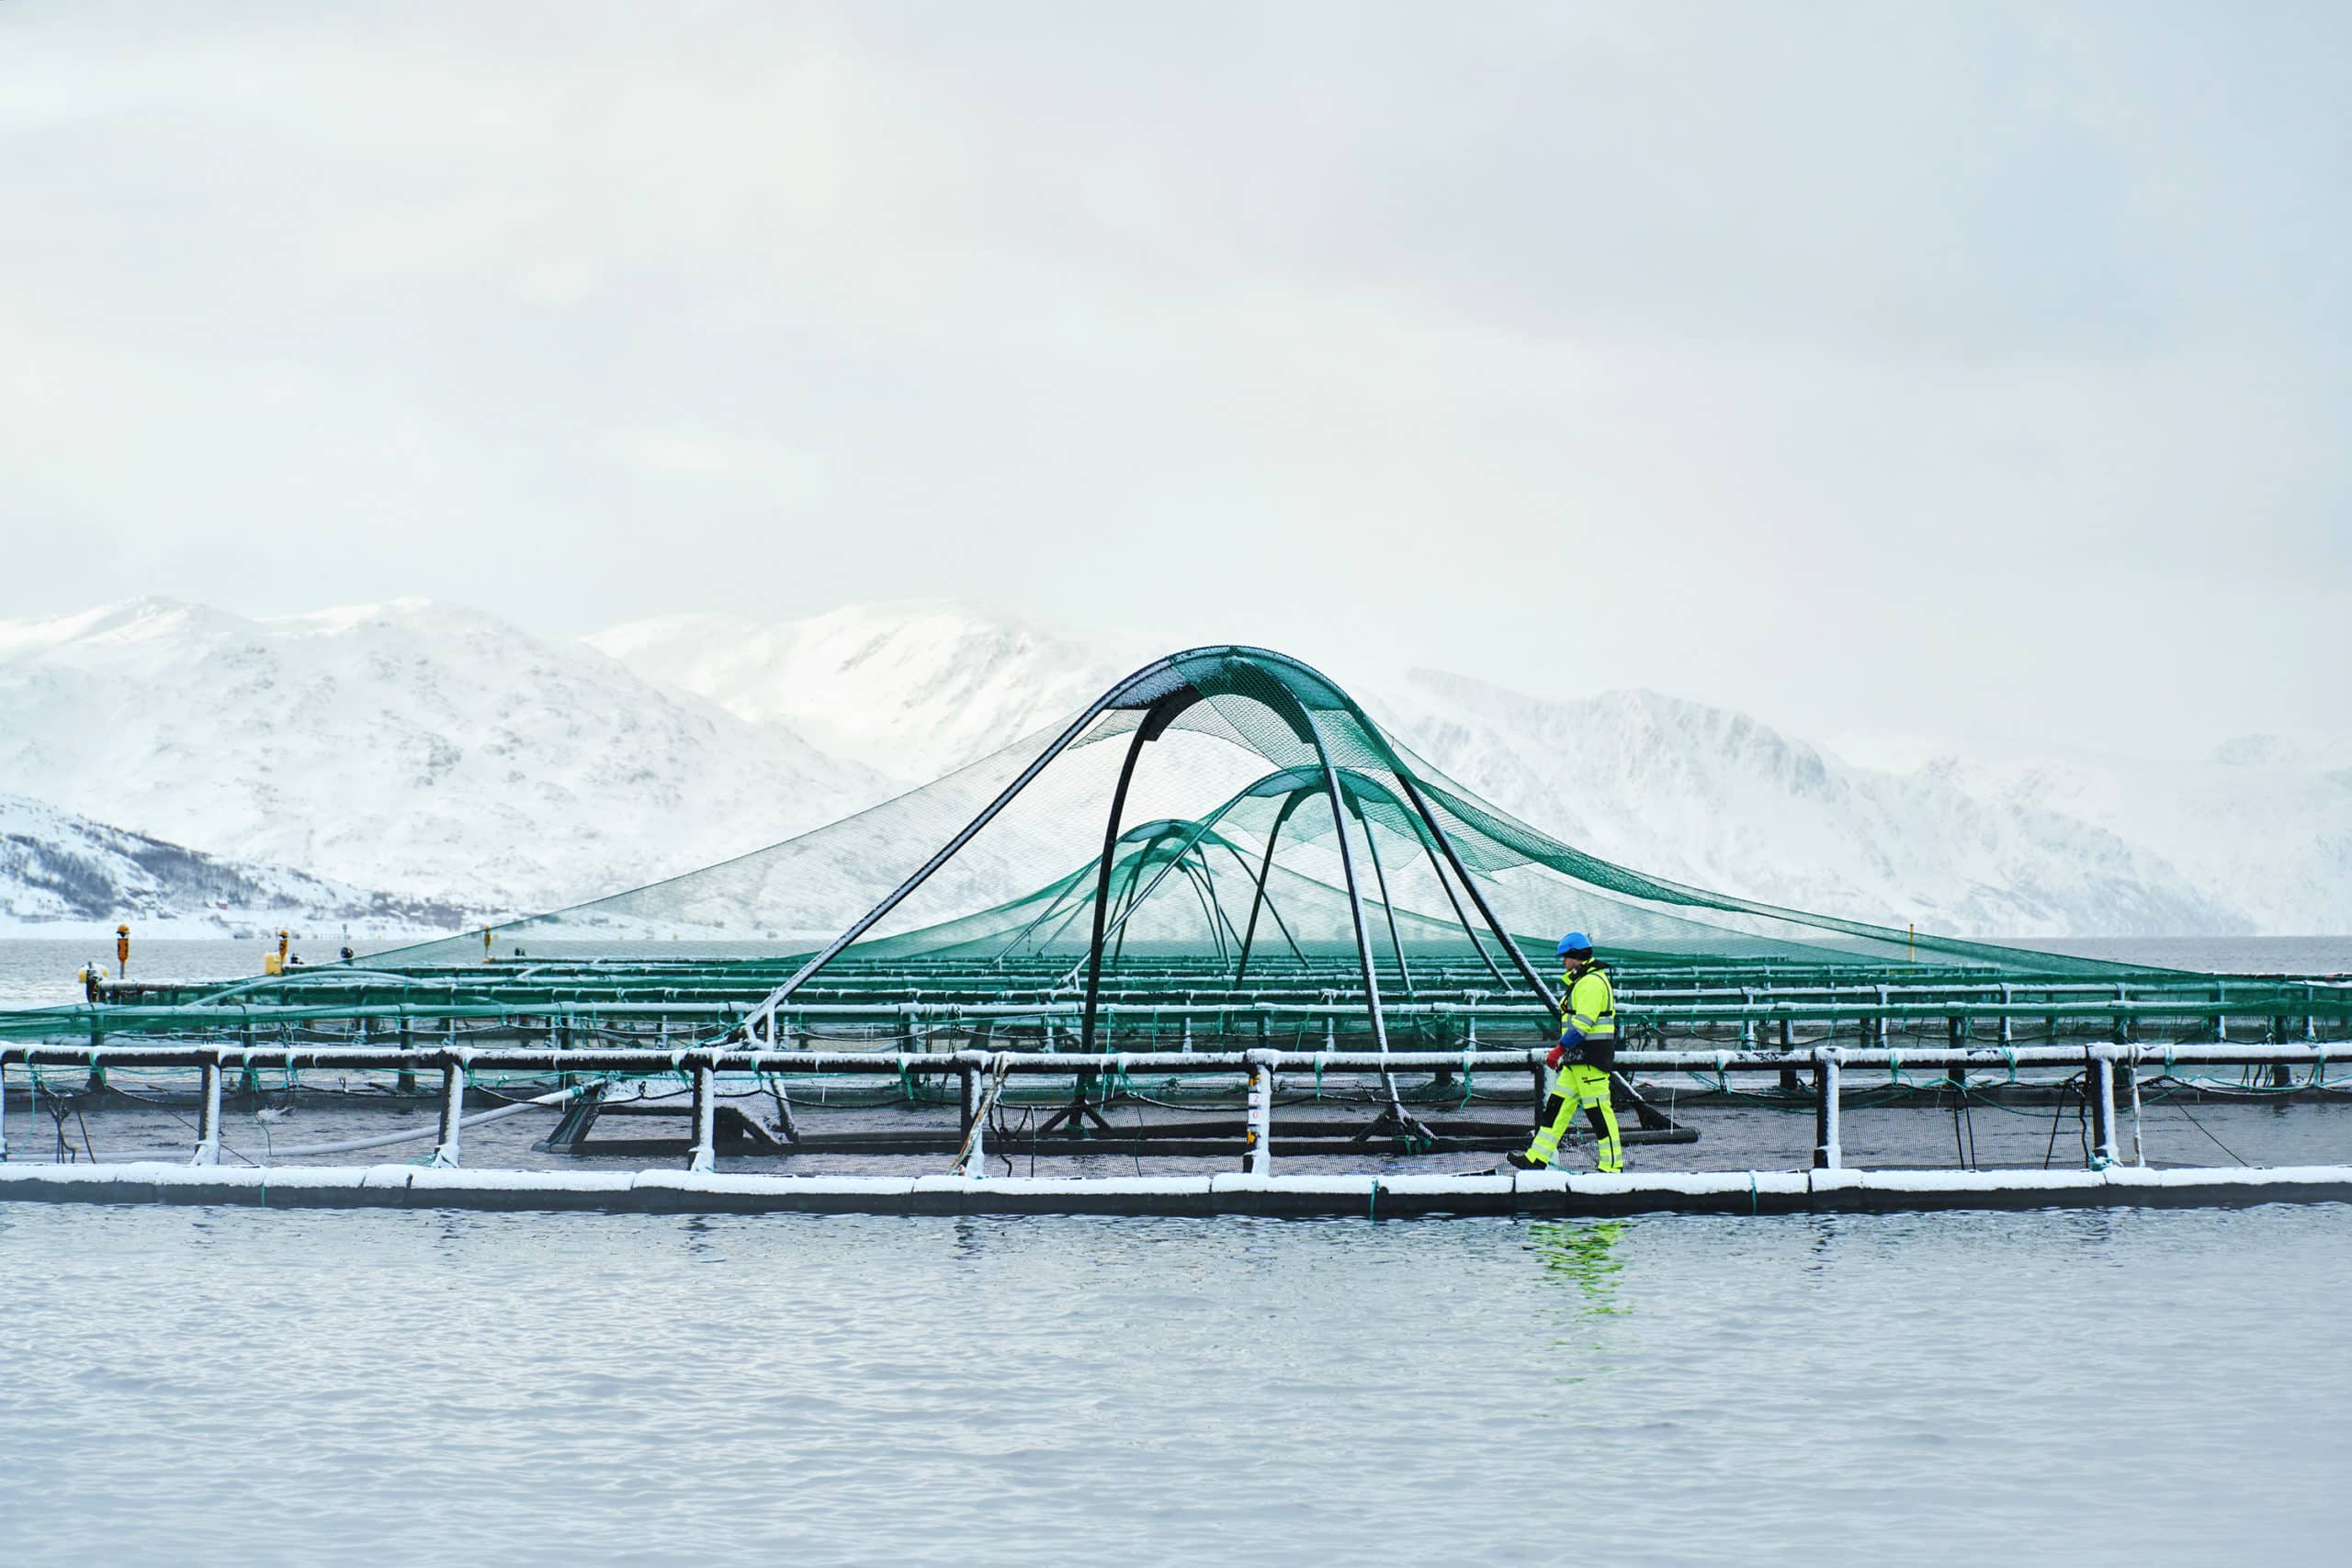 Grieg Aqua and Grieg Seafood employees monitor their salmon farming.